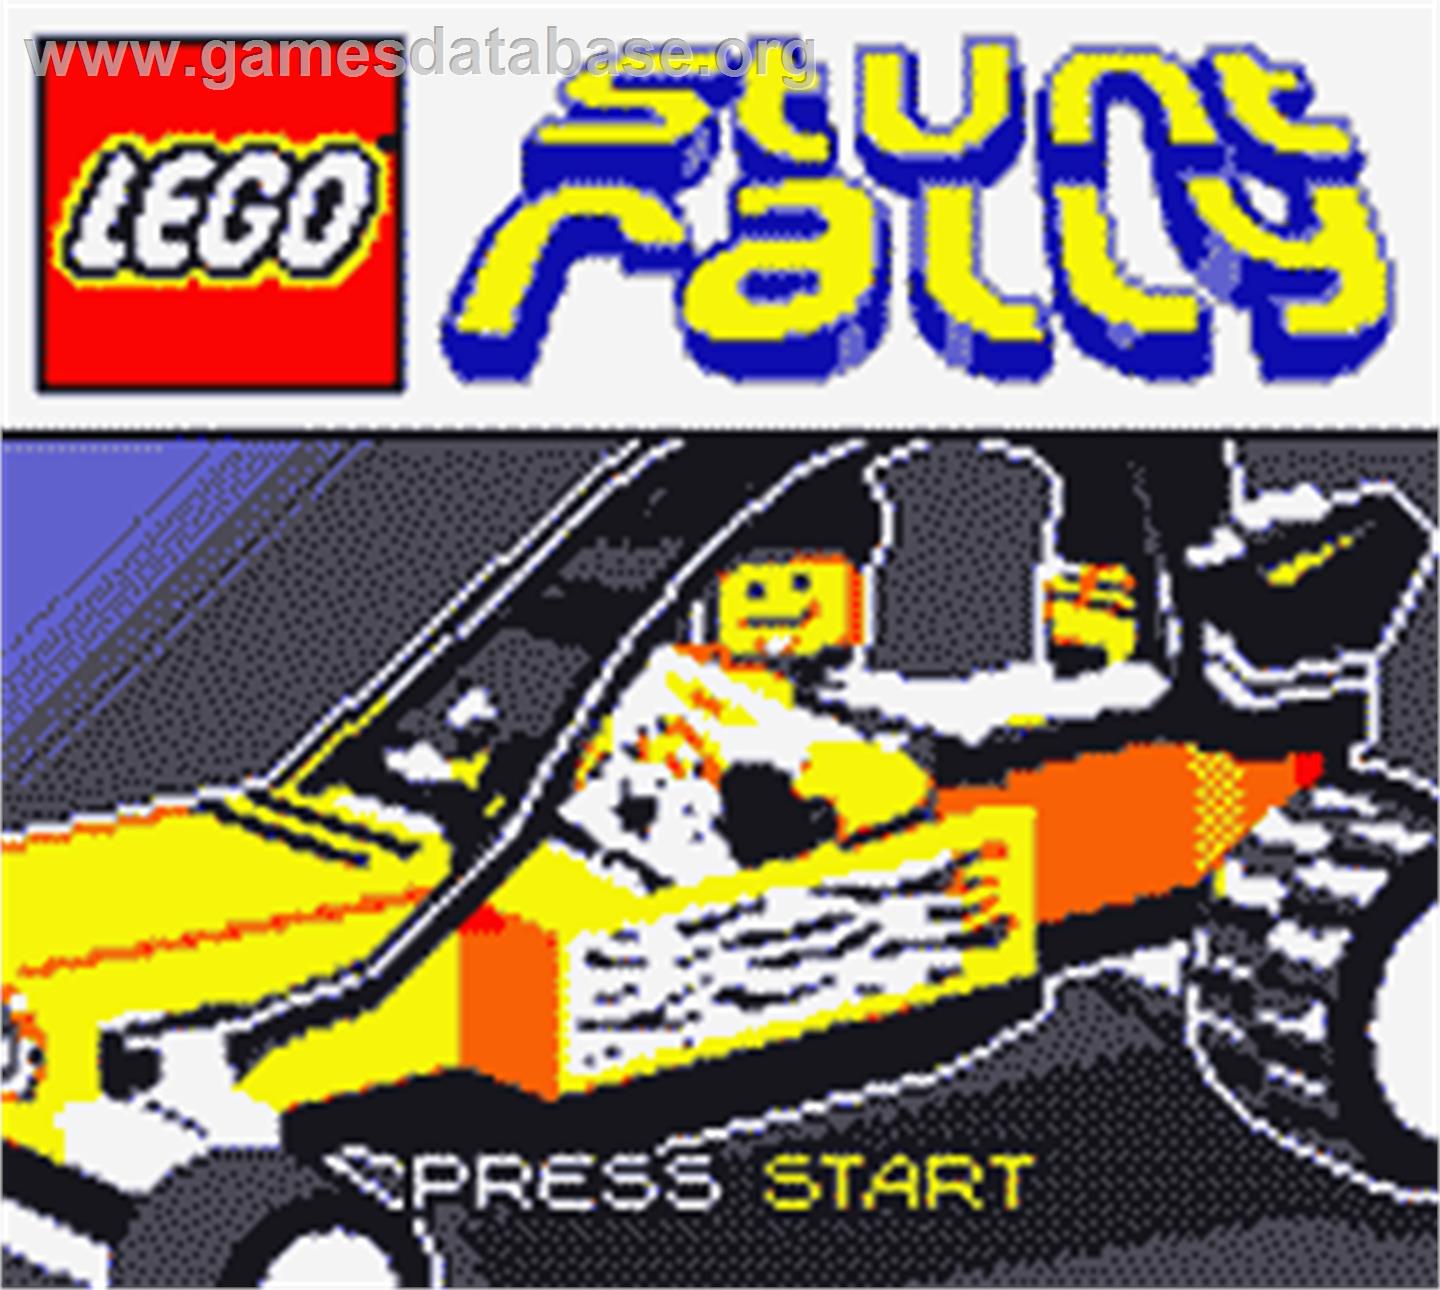 LEGO Stunt Rally - Nintendo Game Boy Color - Artwork - Title Screen